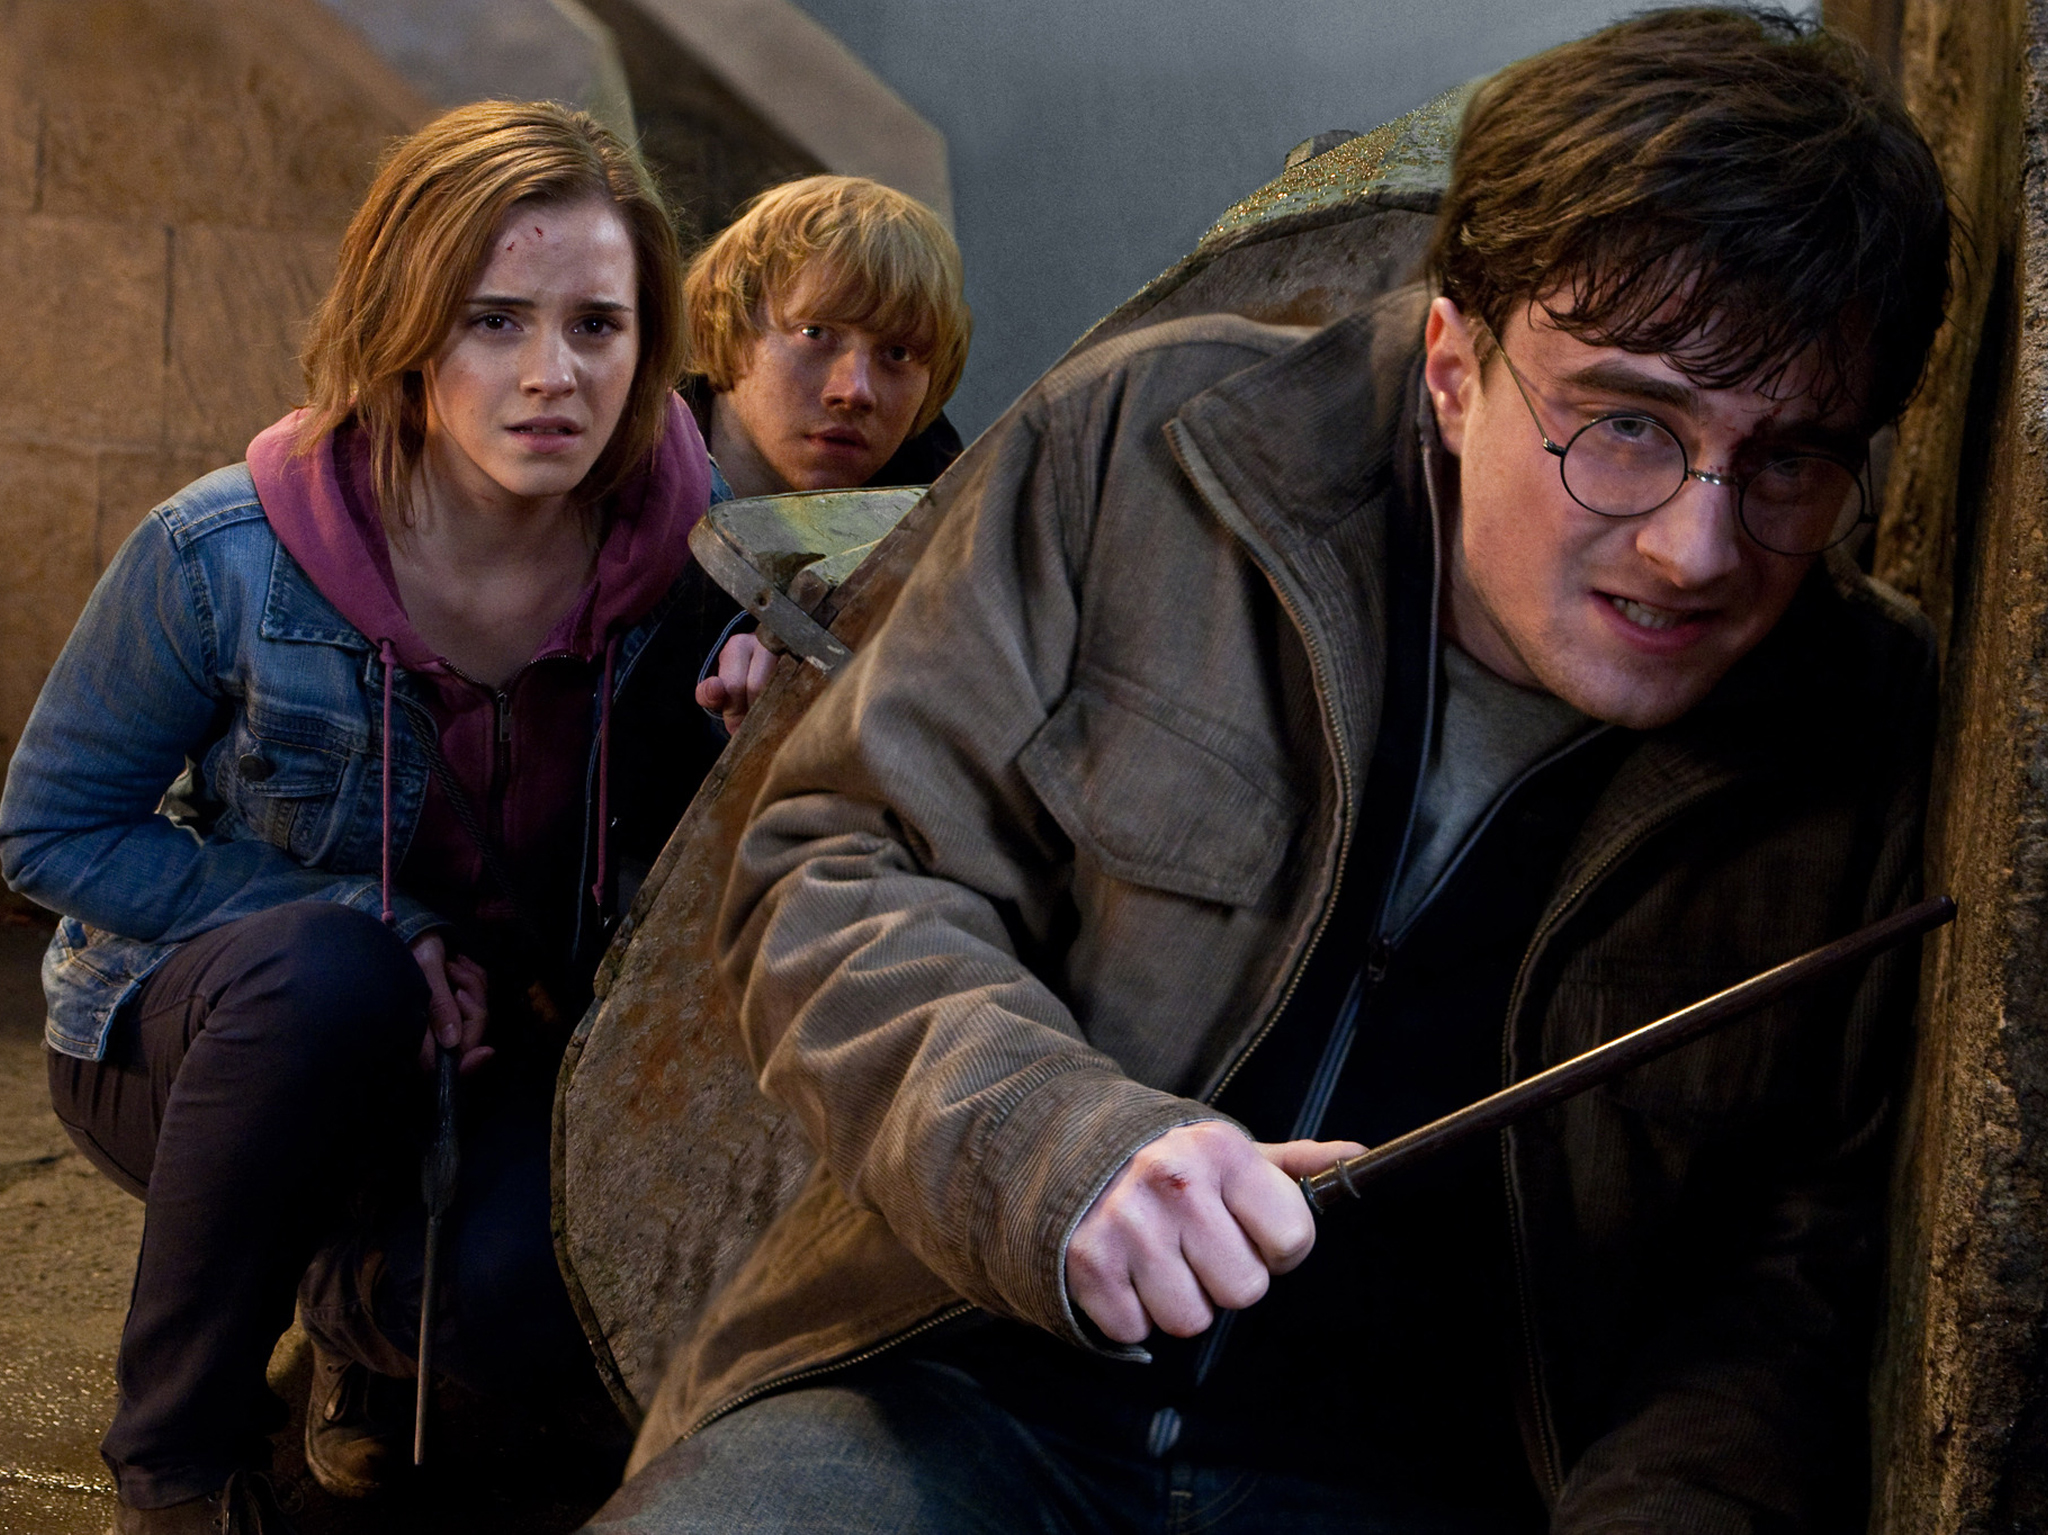 Harry Potter e a Pedra Filosofal: Wingardium Leviosa